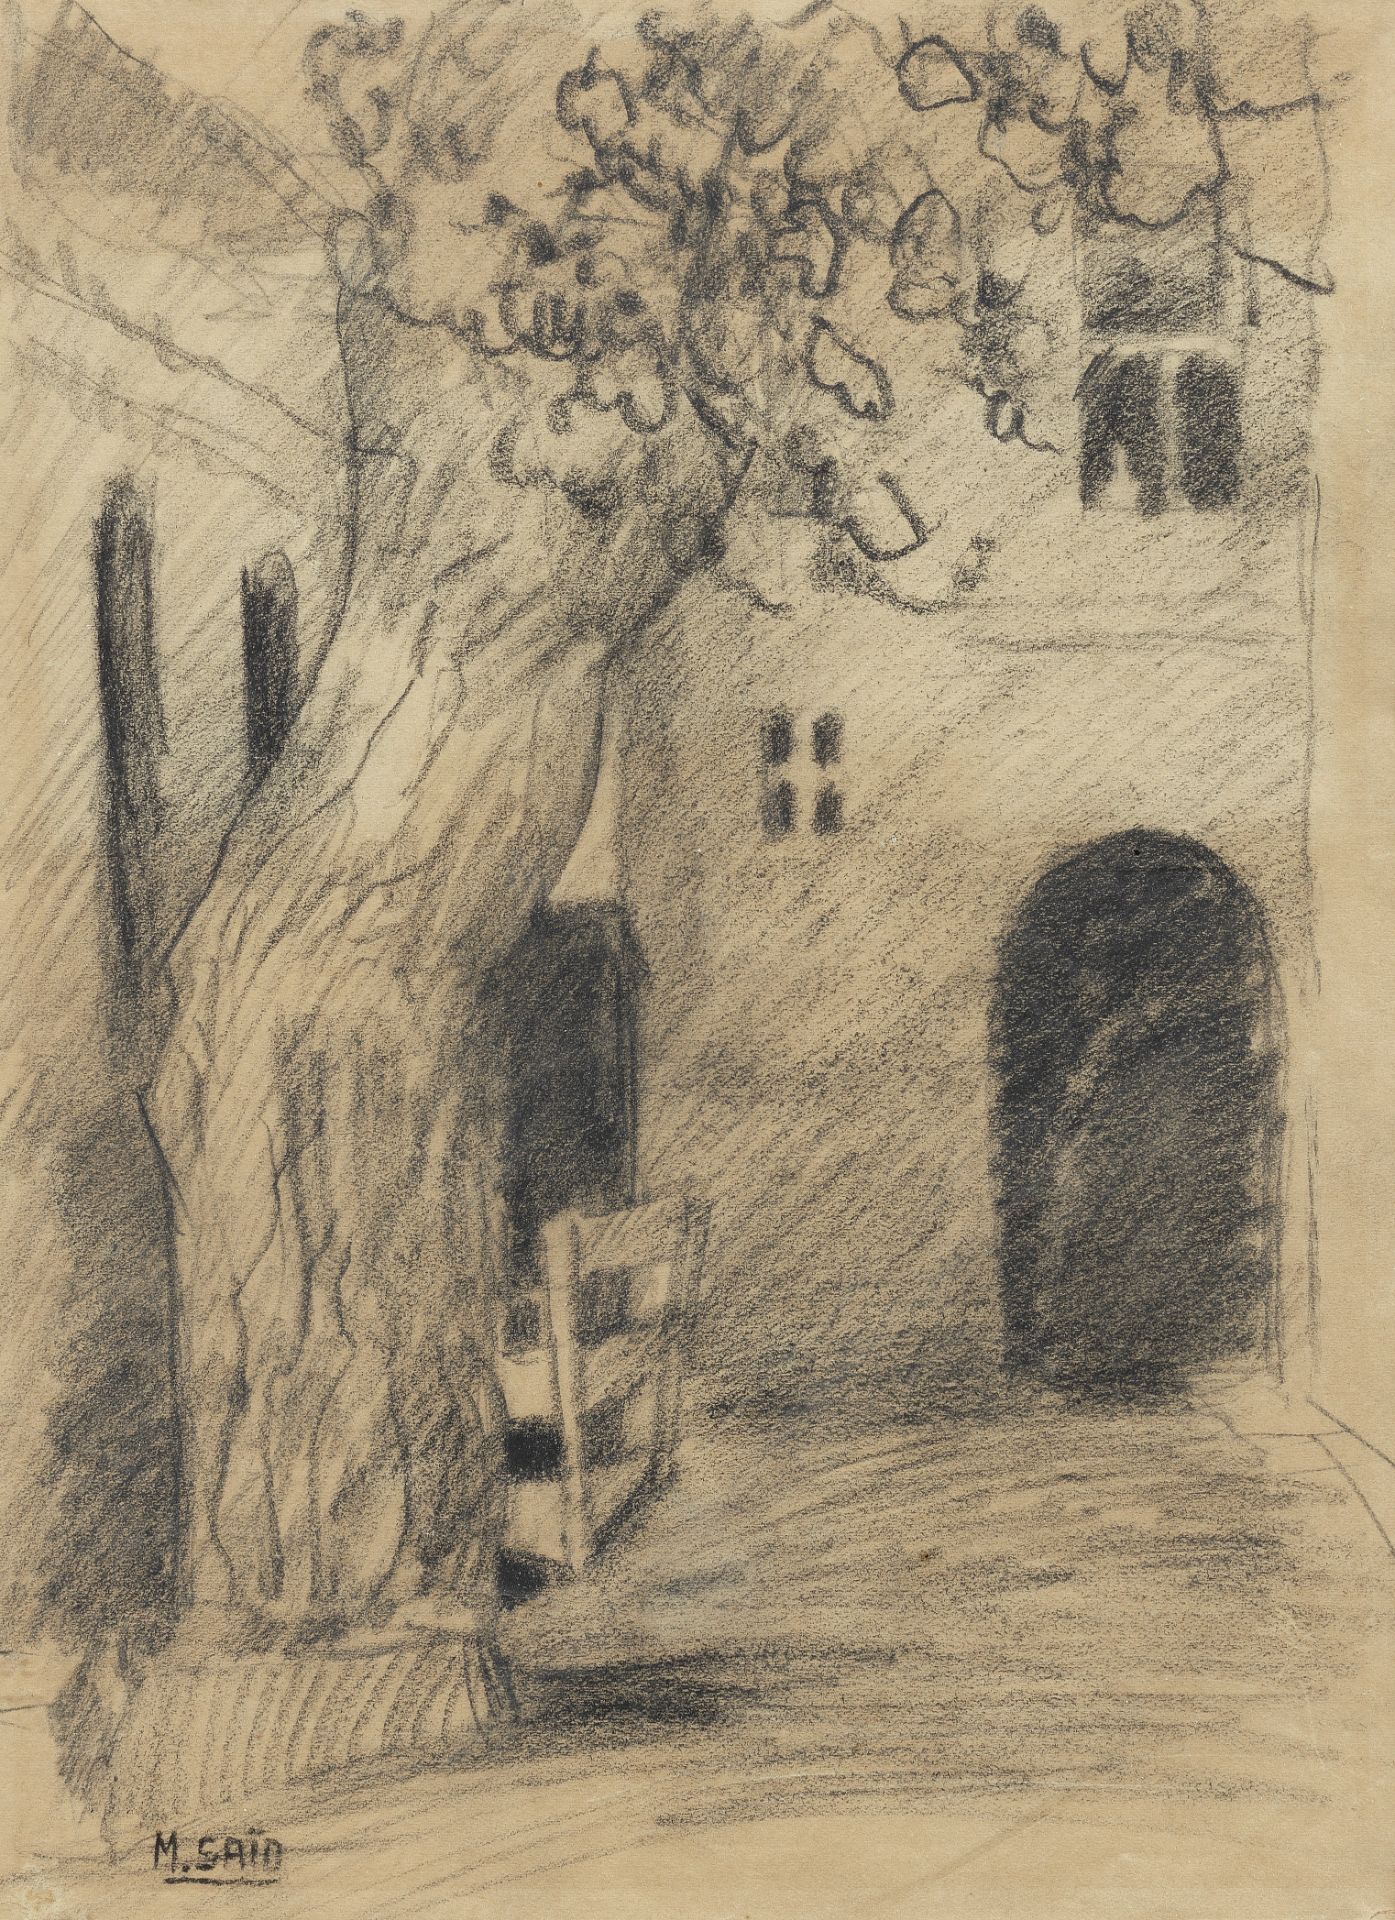 Mahmoud Said (Egypt, 1897-1964) Arbre dans une cour (Tree in a Courtyard)